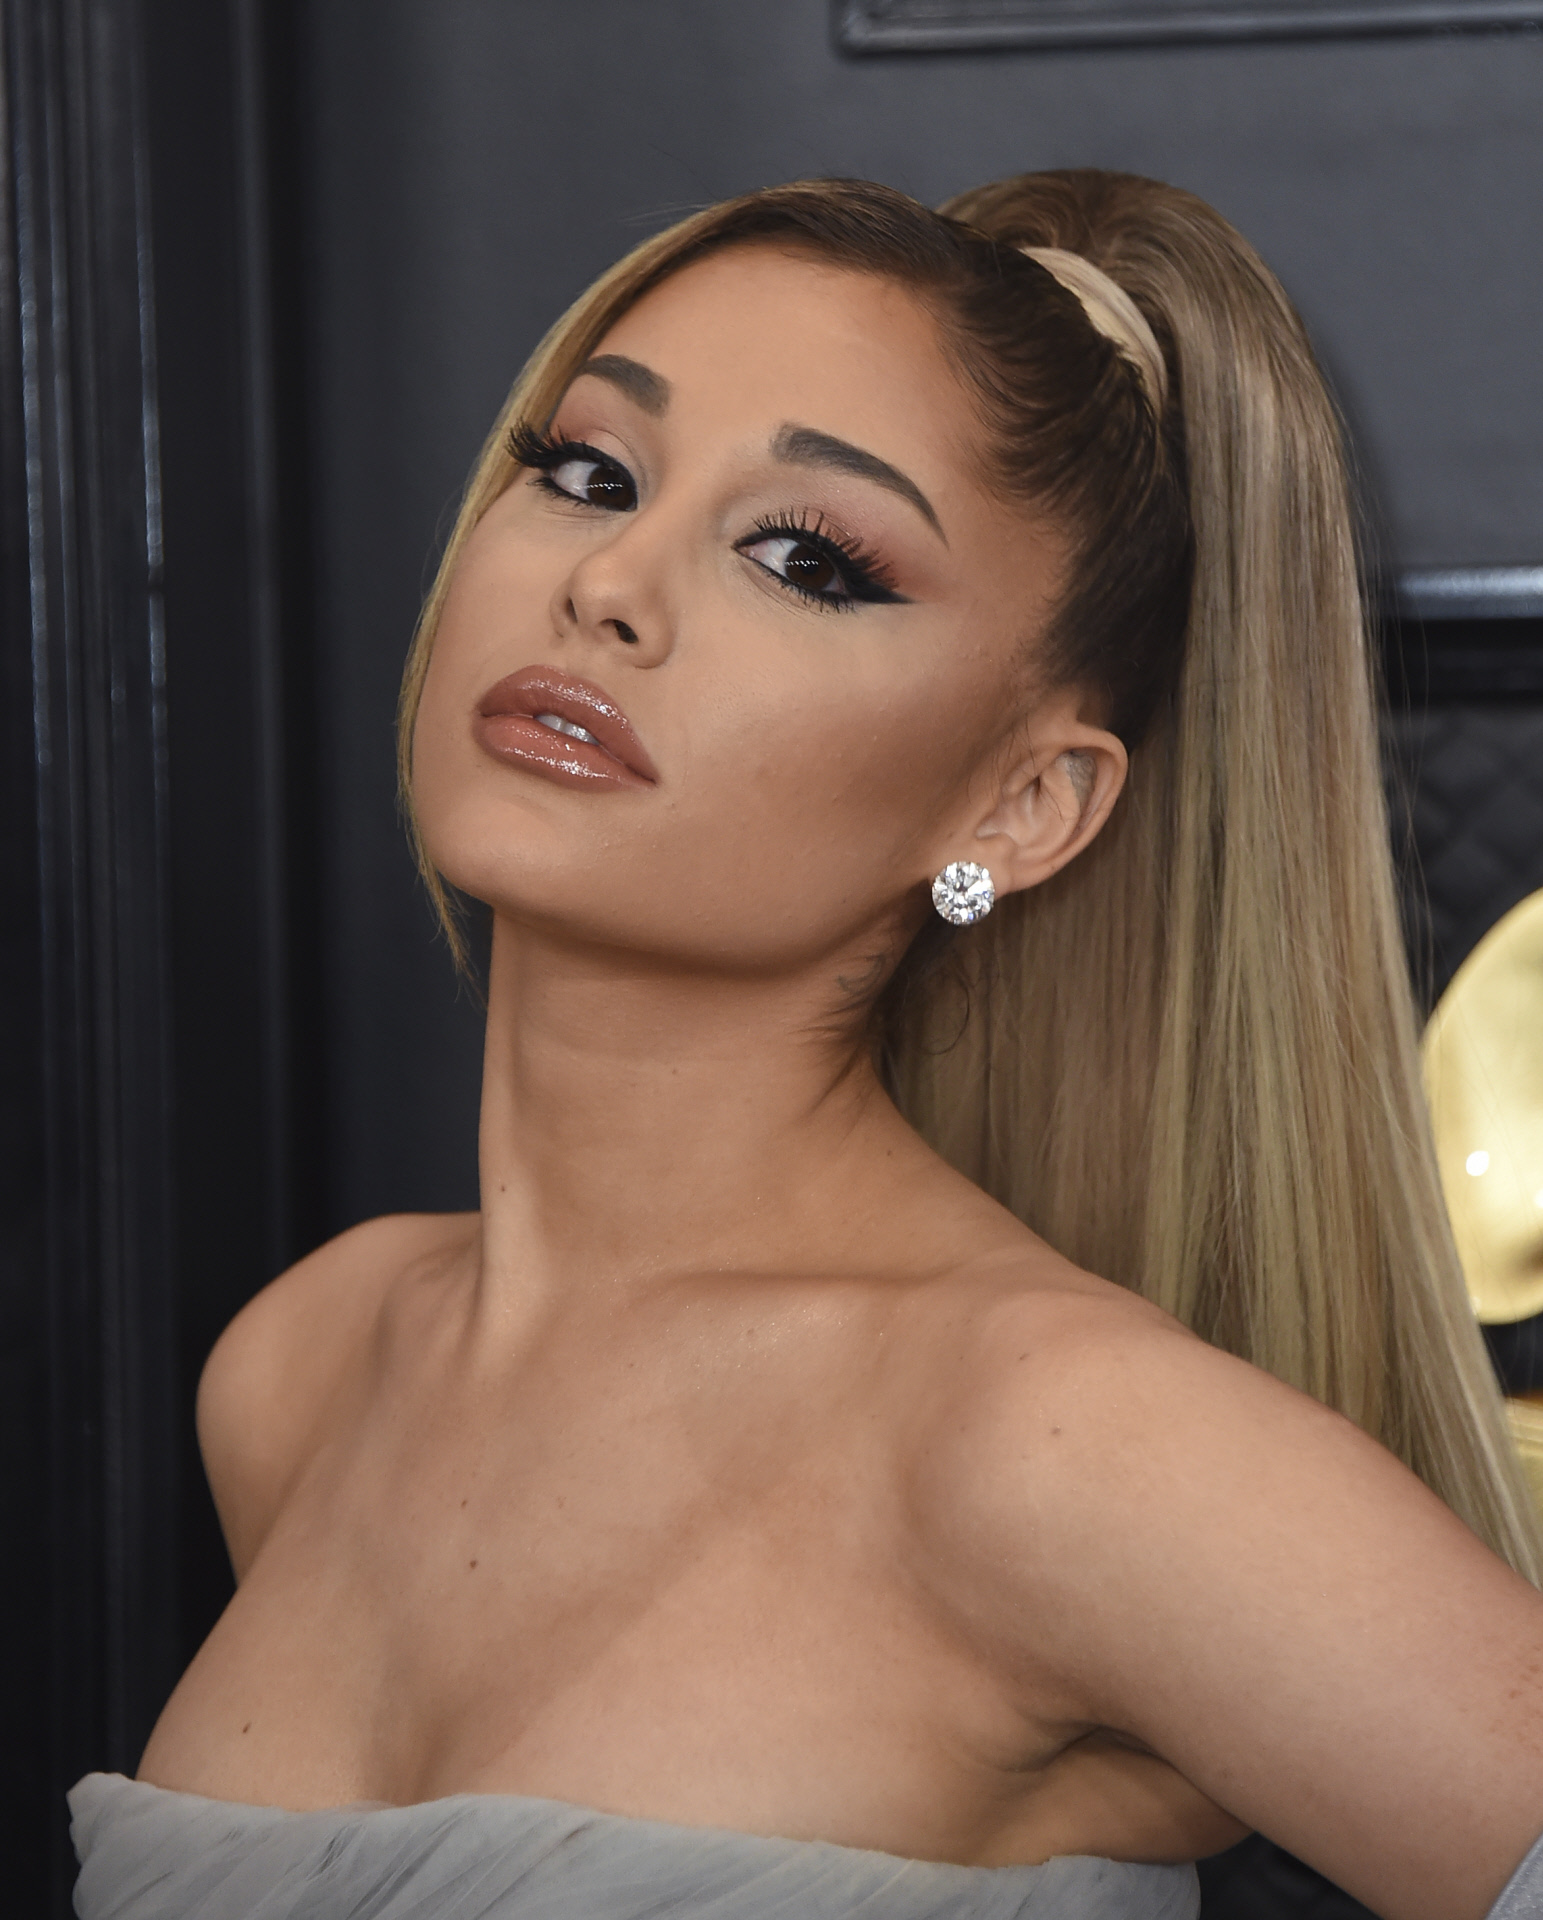 Ariana Grande has made her trademark doll hair ponytail